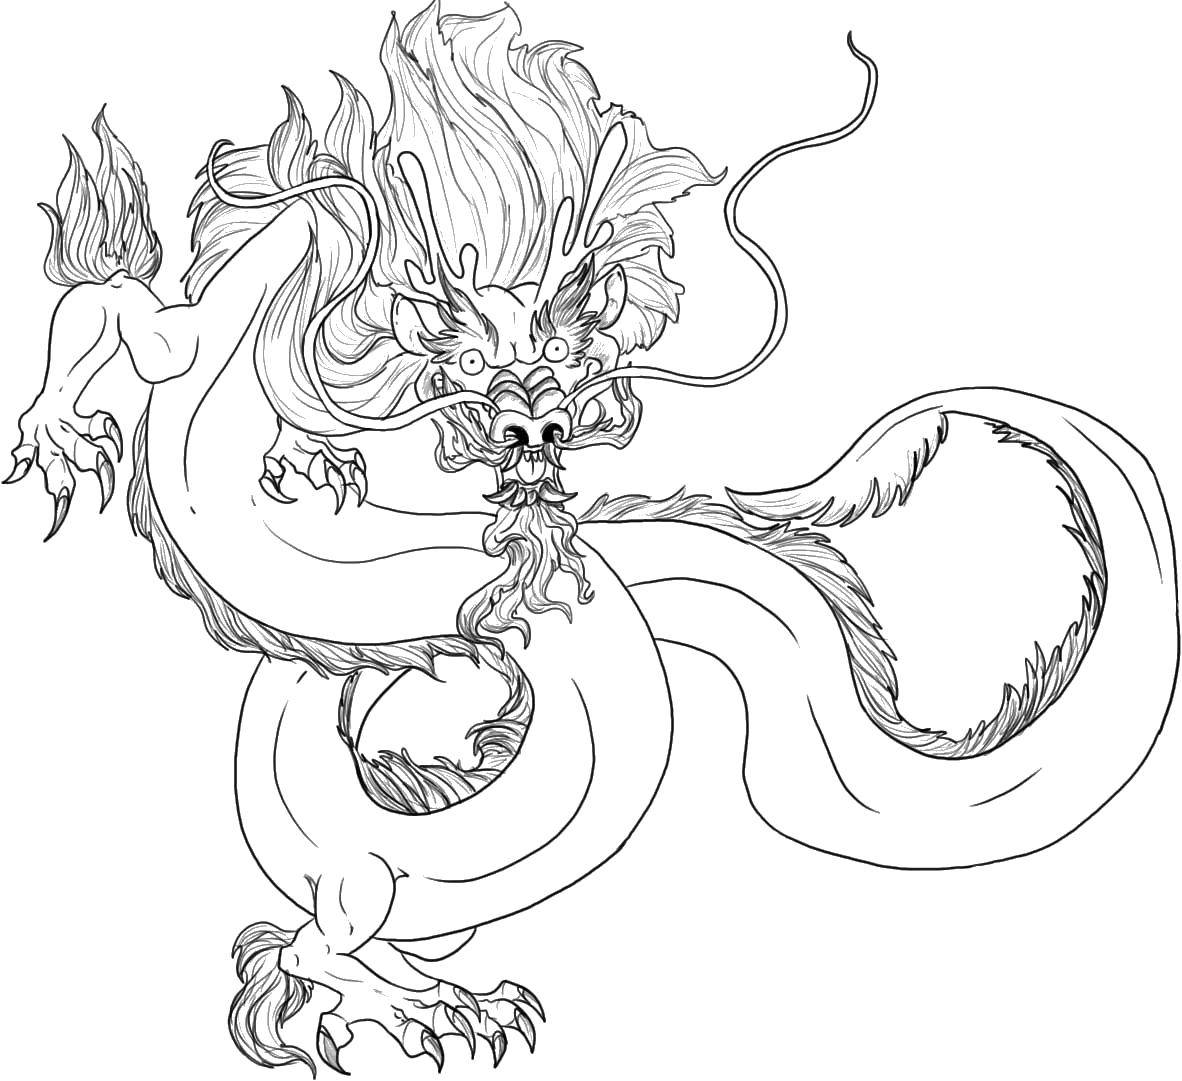 Coloring Chic Chinese dragon. Category China. Tags:  China.